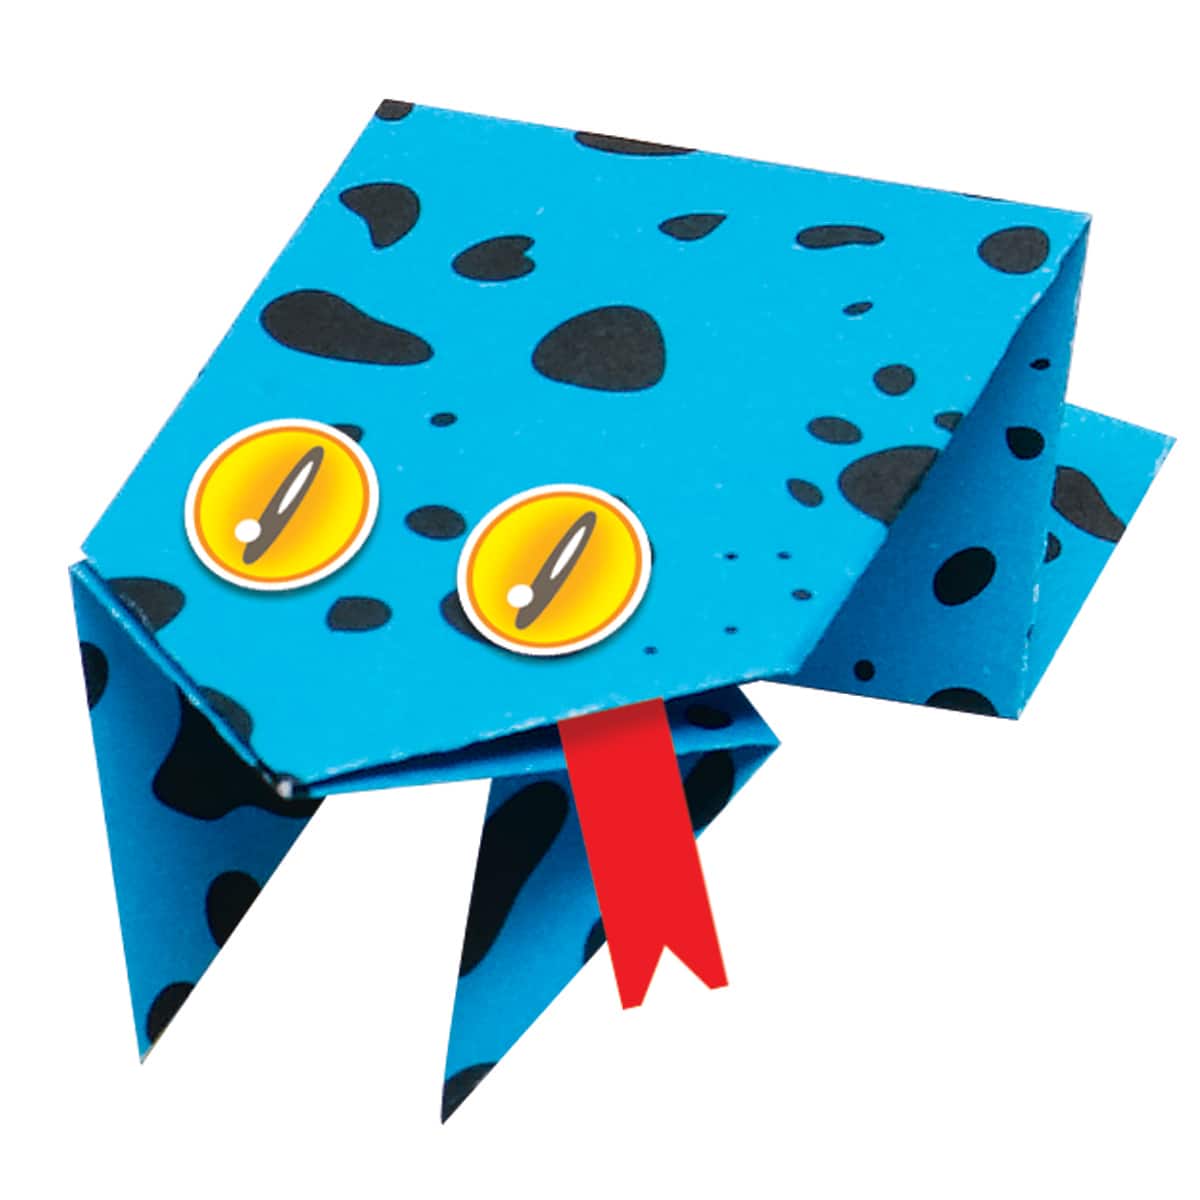 Origami Kit for Kids 50% Off - Deals Finders